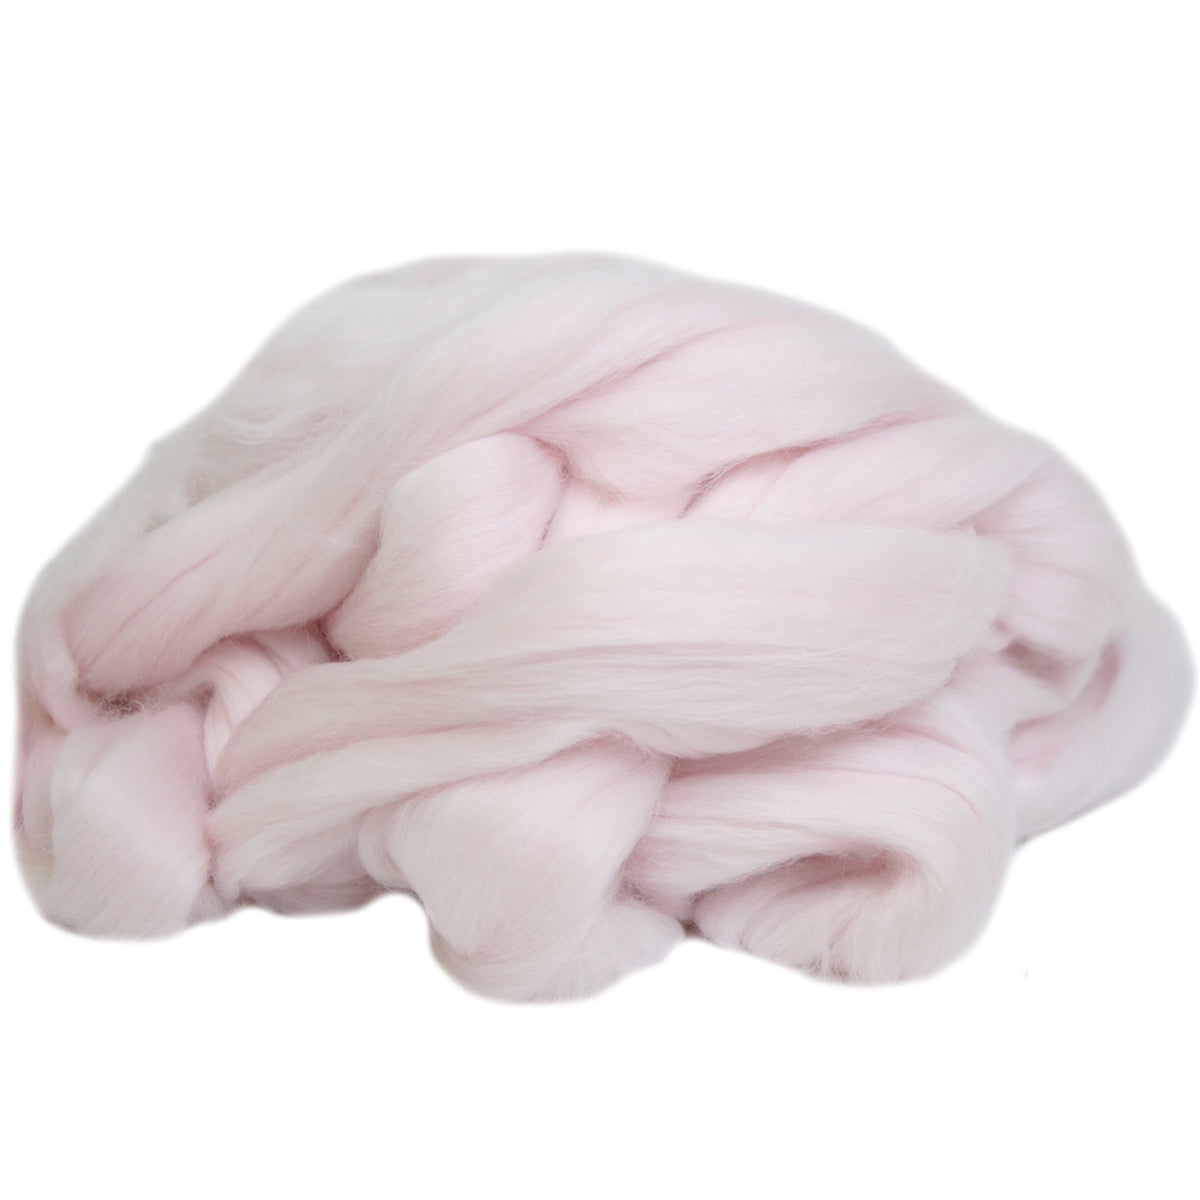 Merino Wool Top Pink Lace 950g